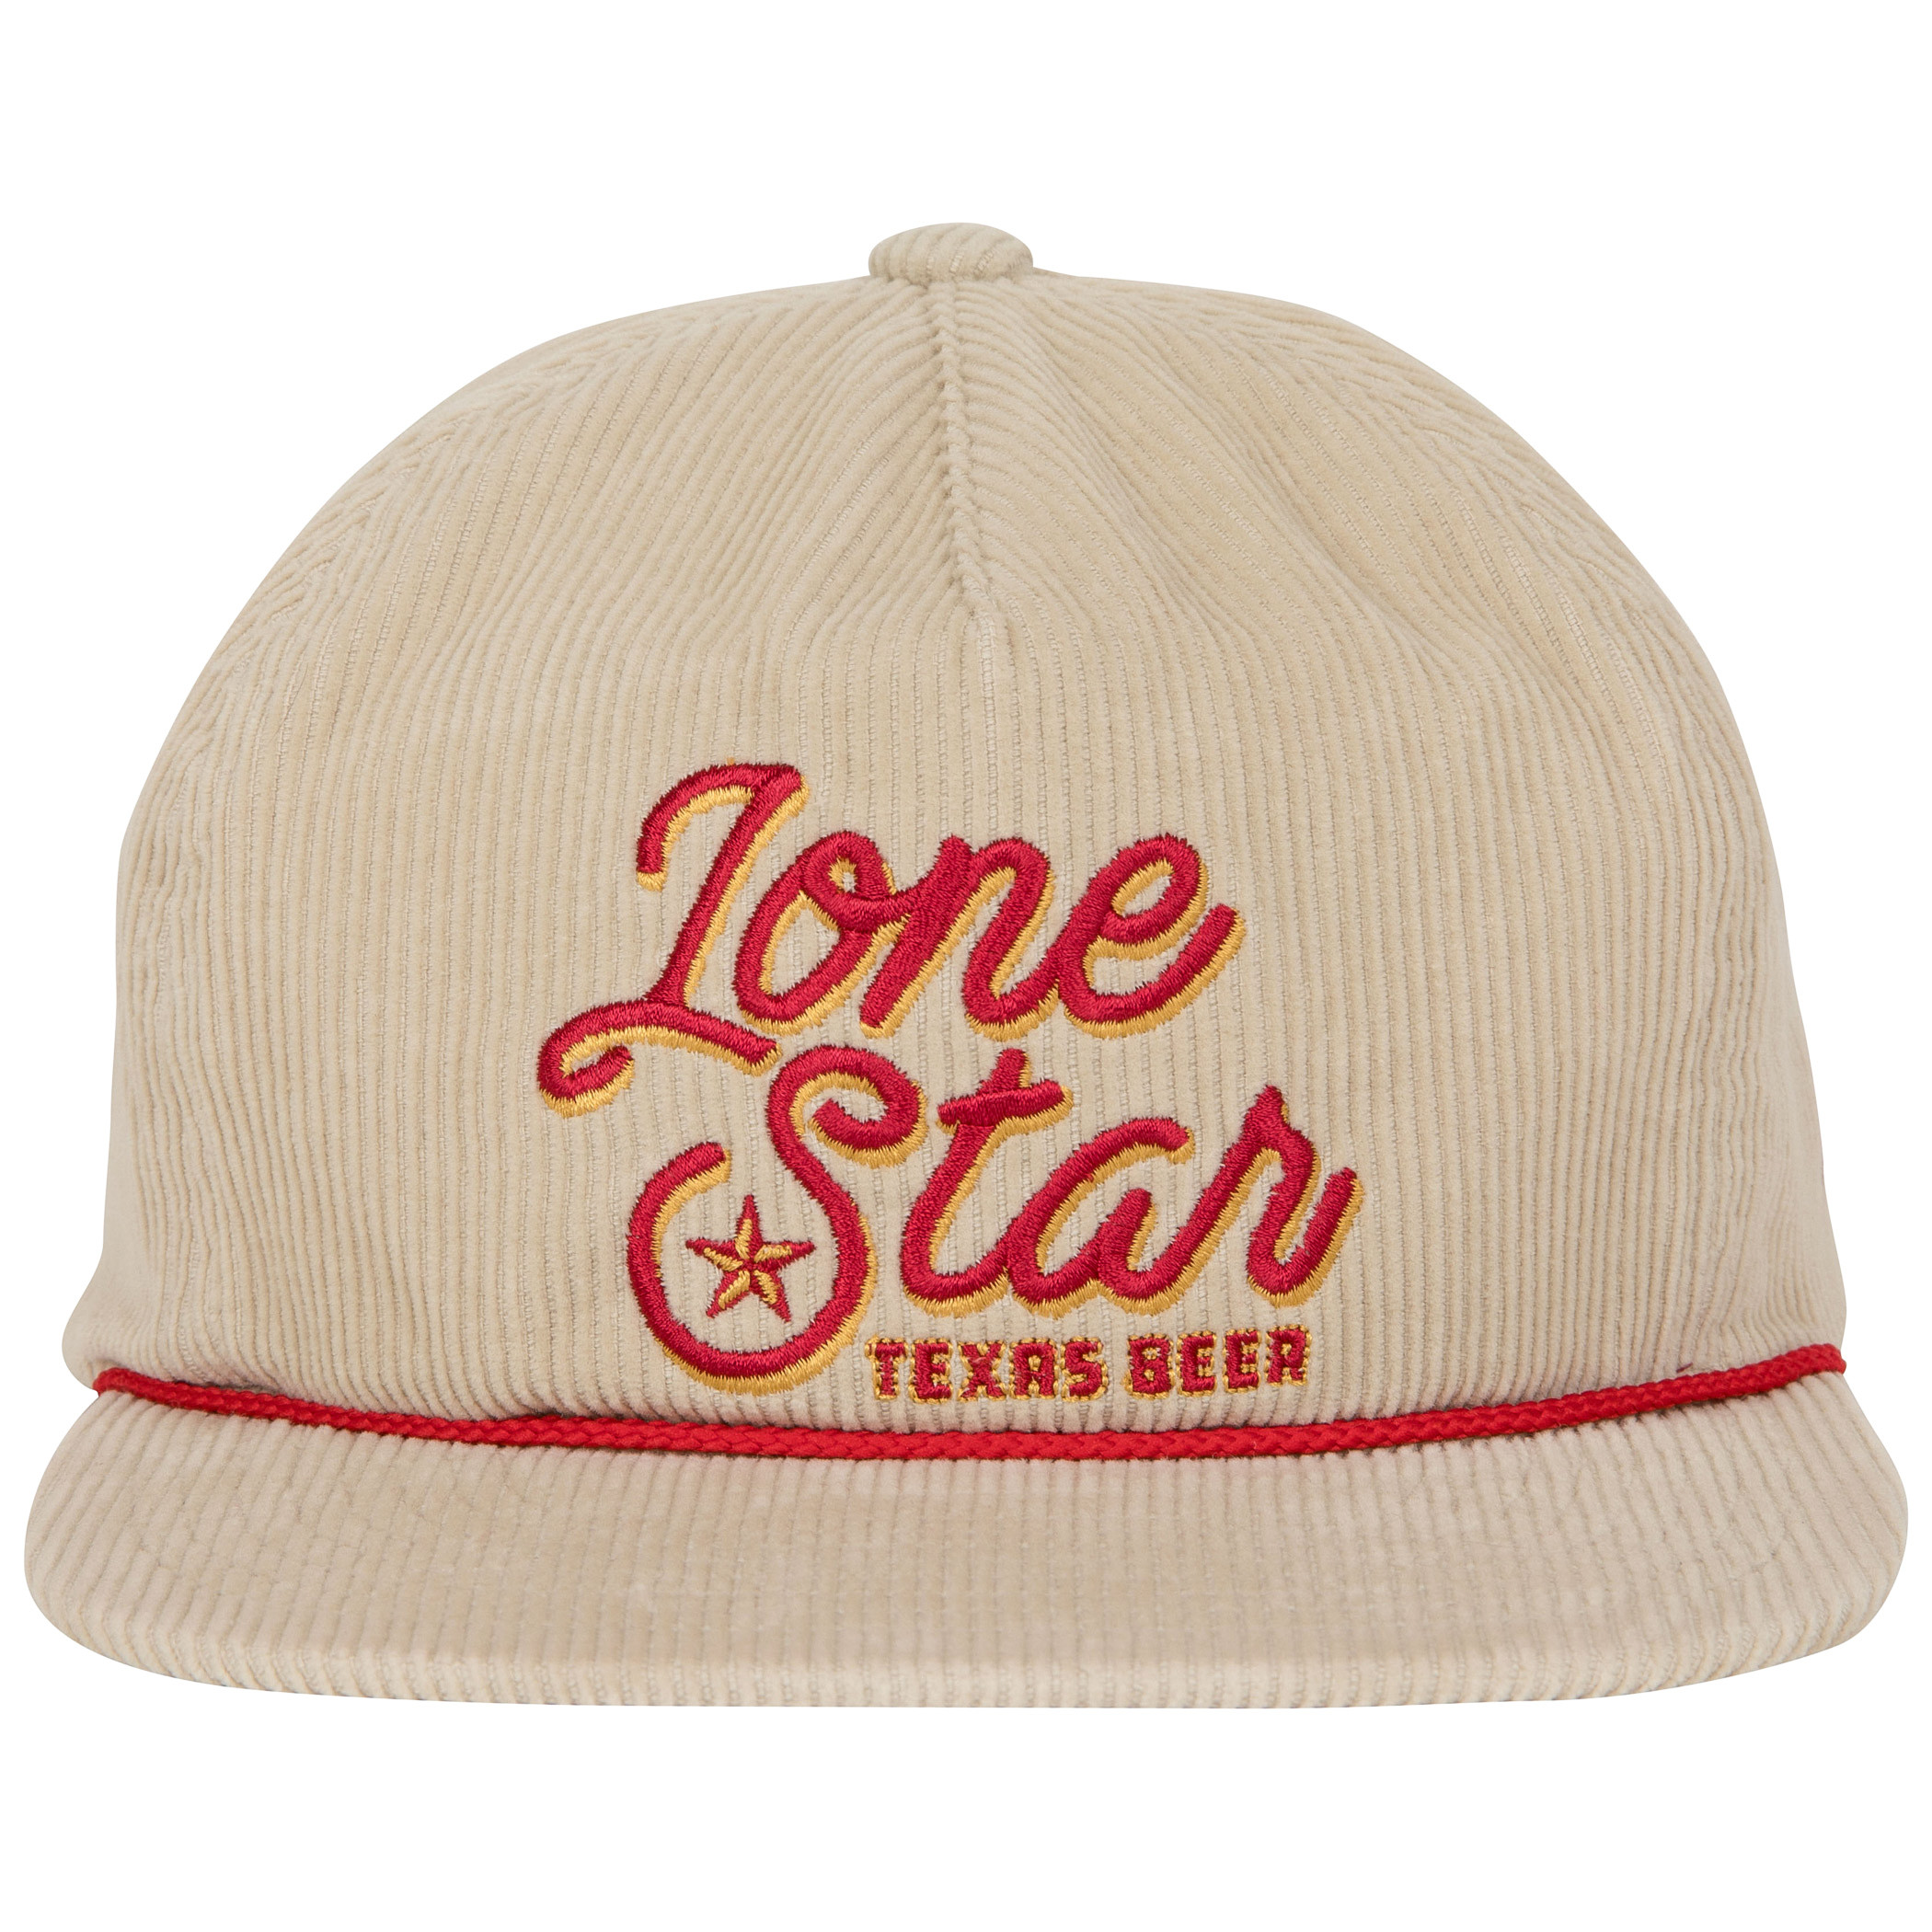 Lone Star Texas Beer Corduroy Hybrid Bill Adjustable Hat